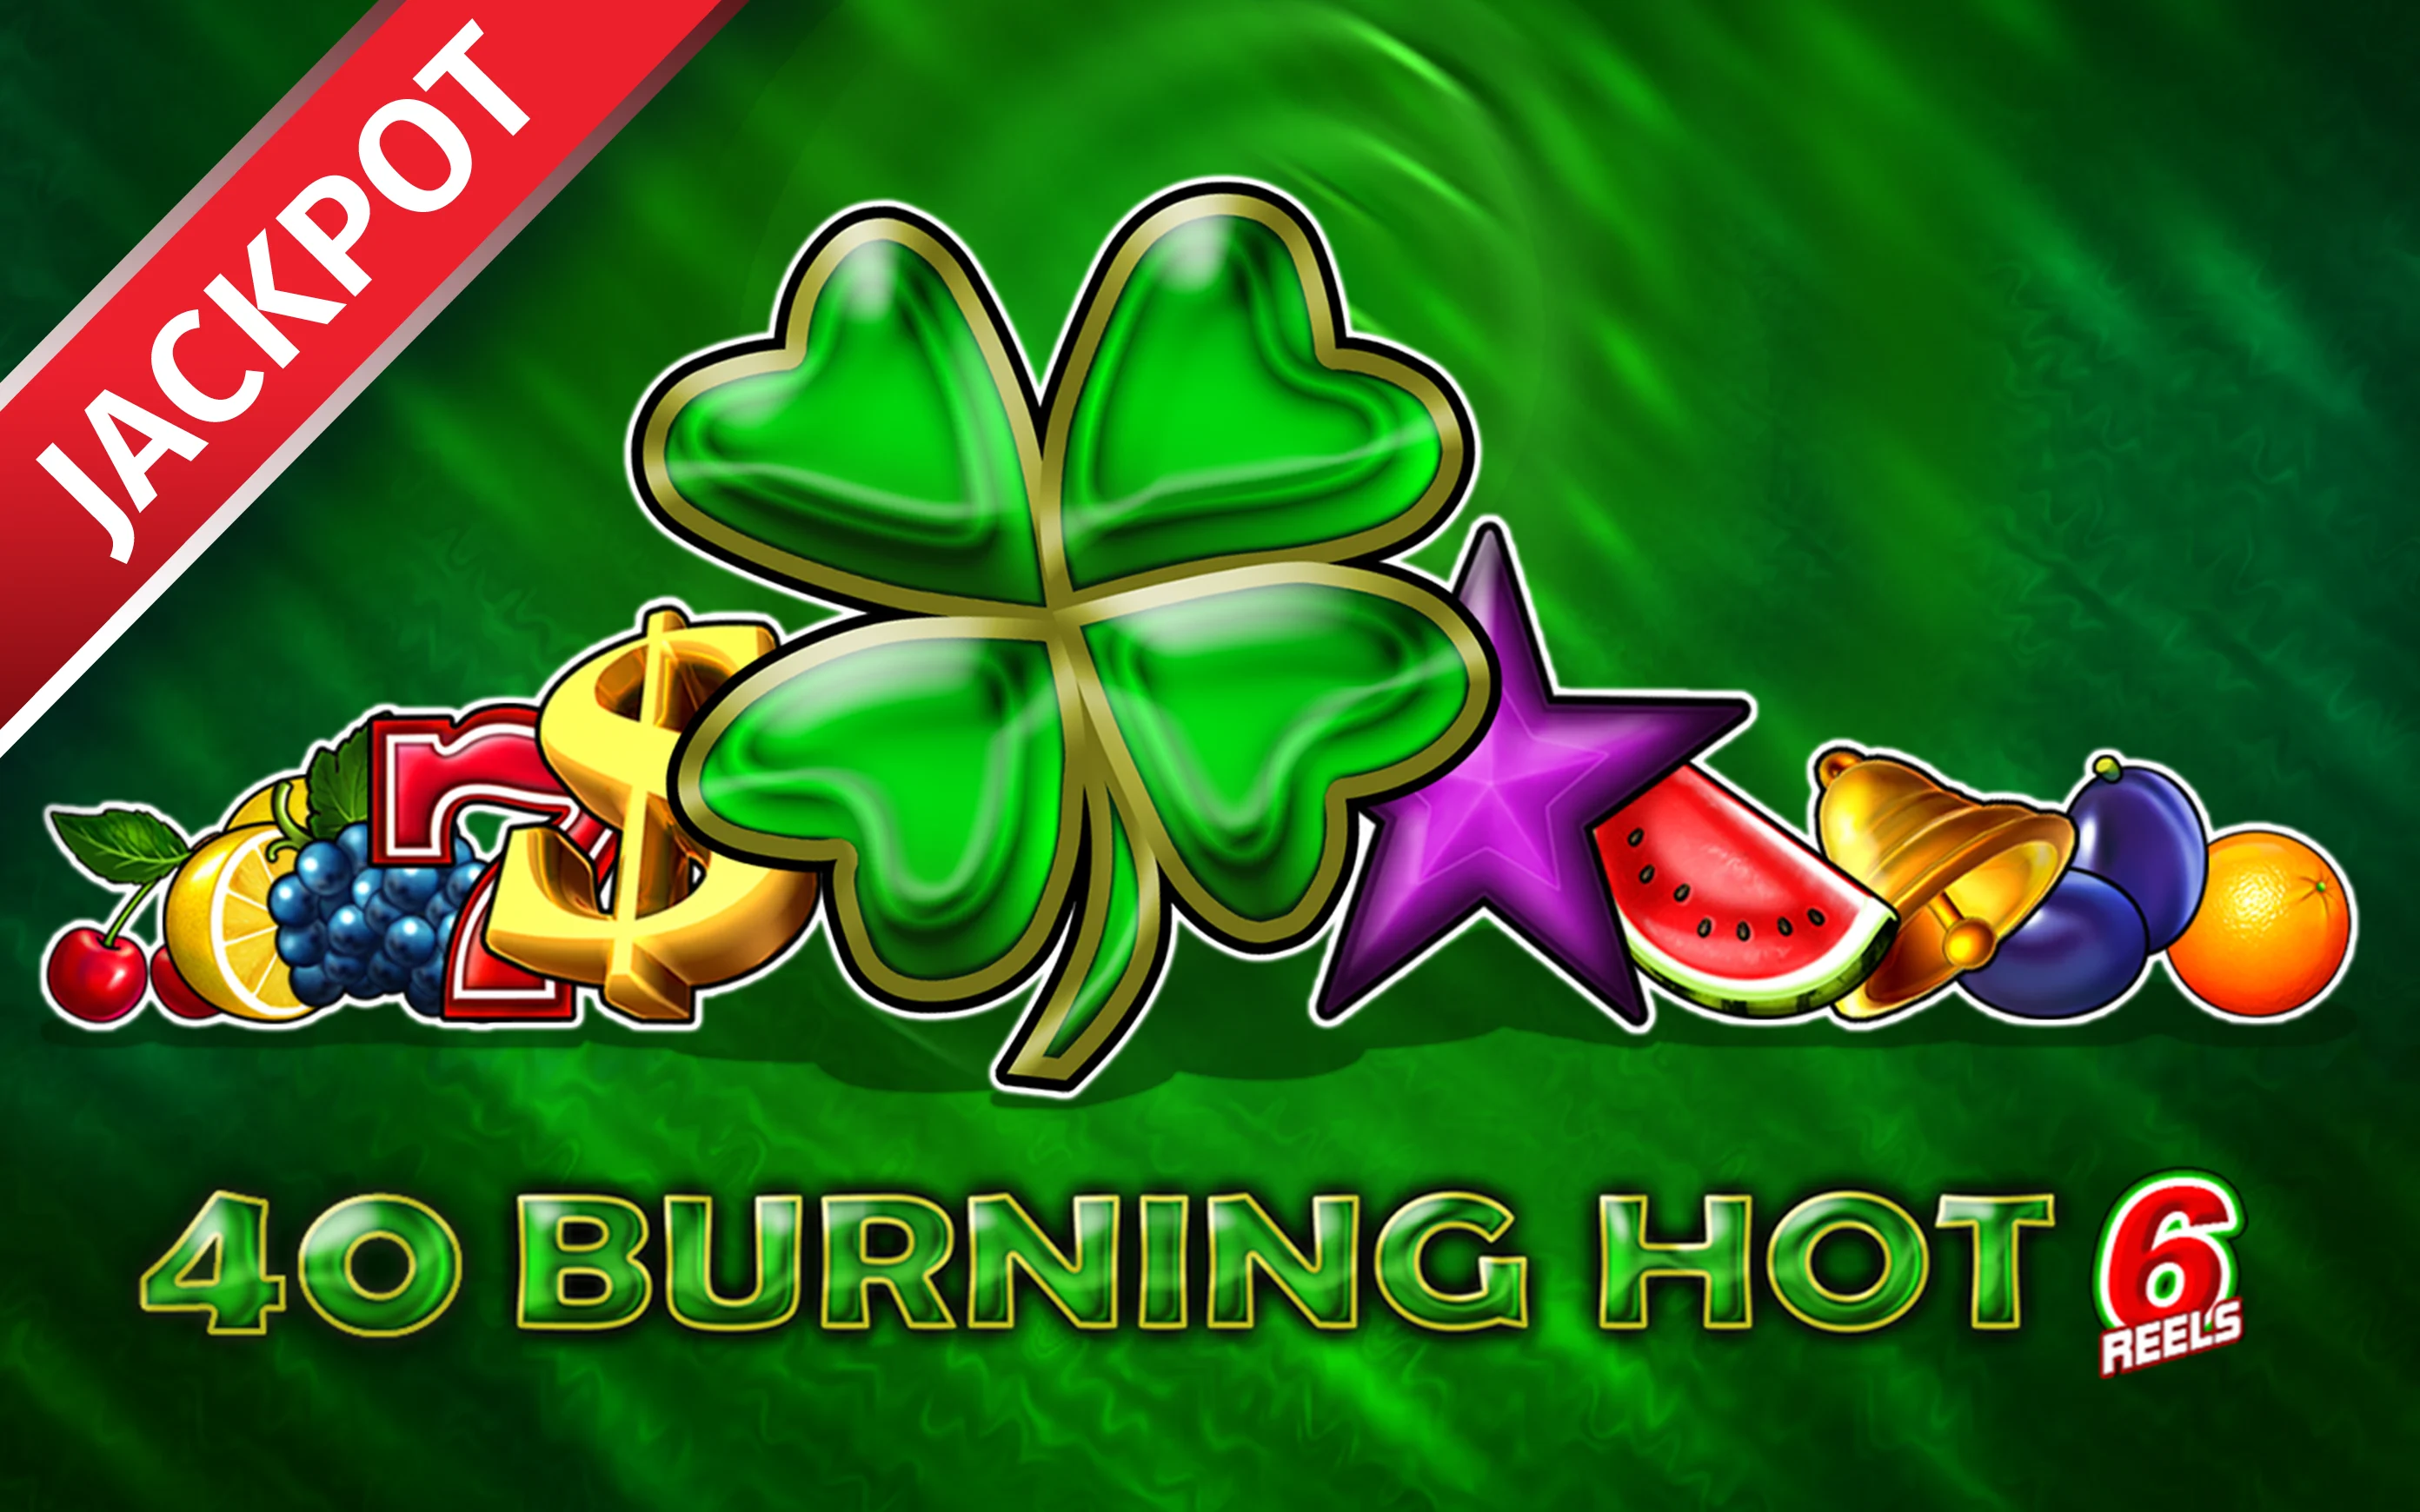 Joacă 40 Burning Hot 6 Reels în cazinoul online Starcasino.be